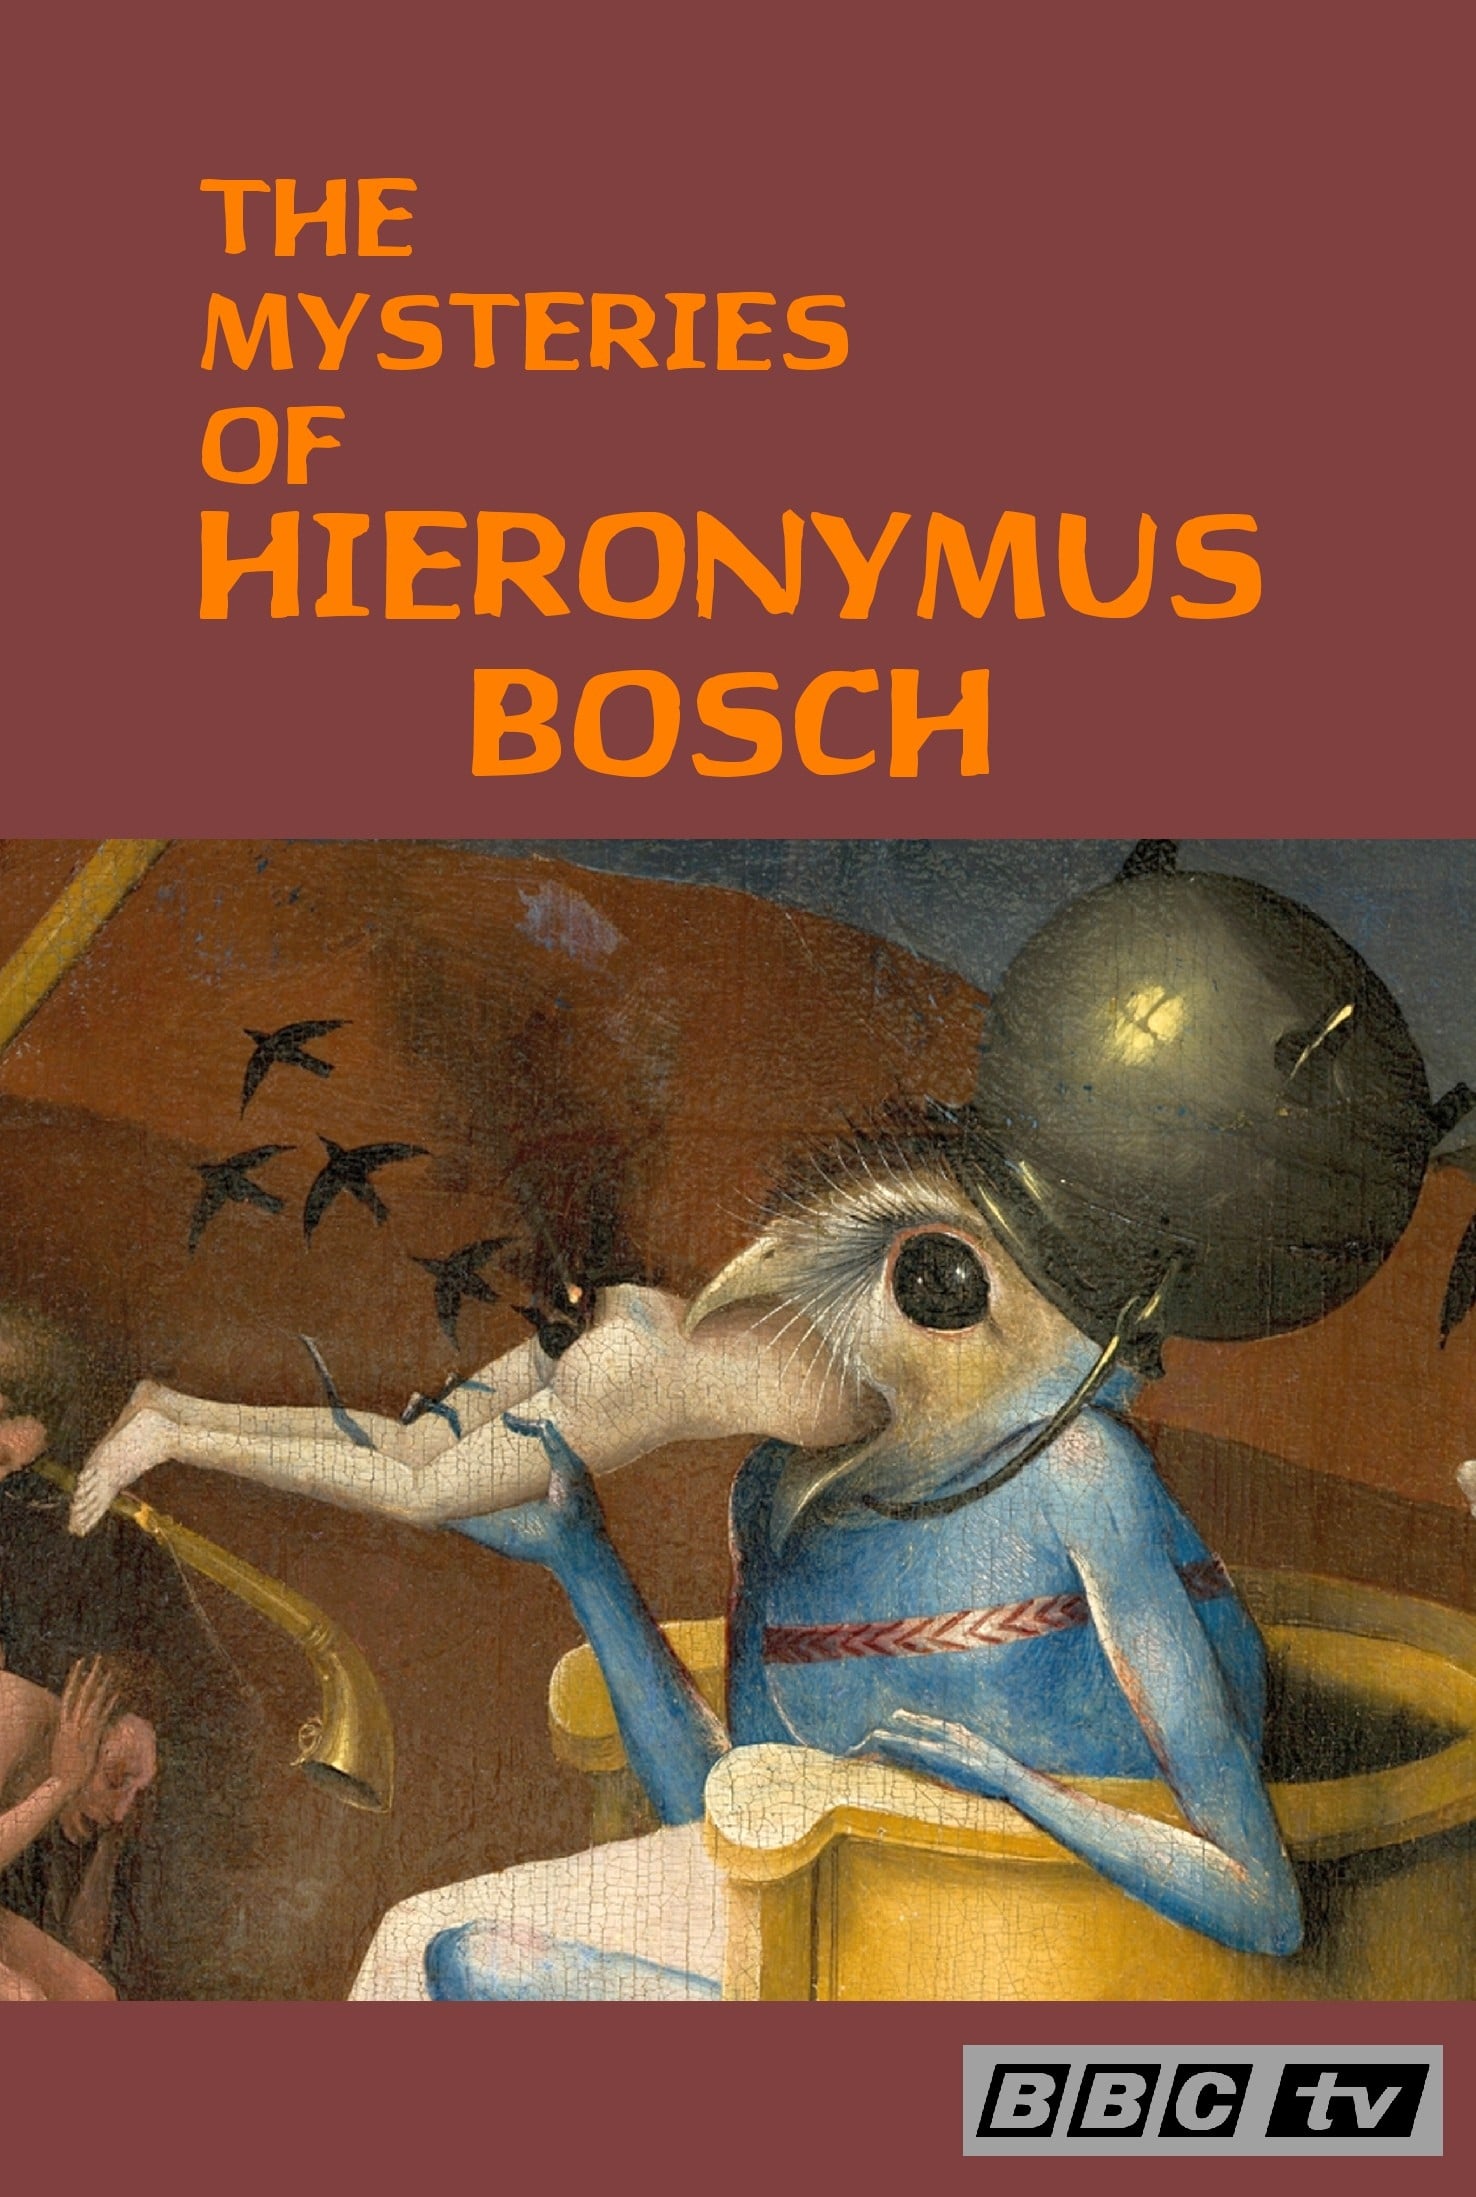 Hieronymus Bosch: The Mysteries of Hieronymus Bosch